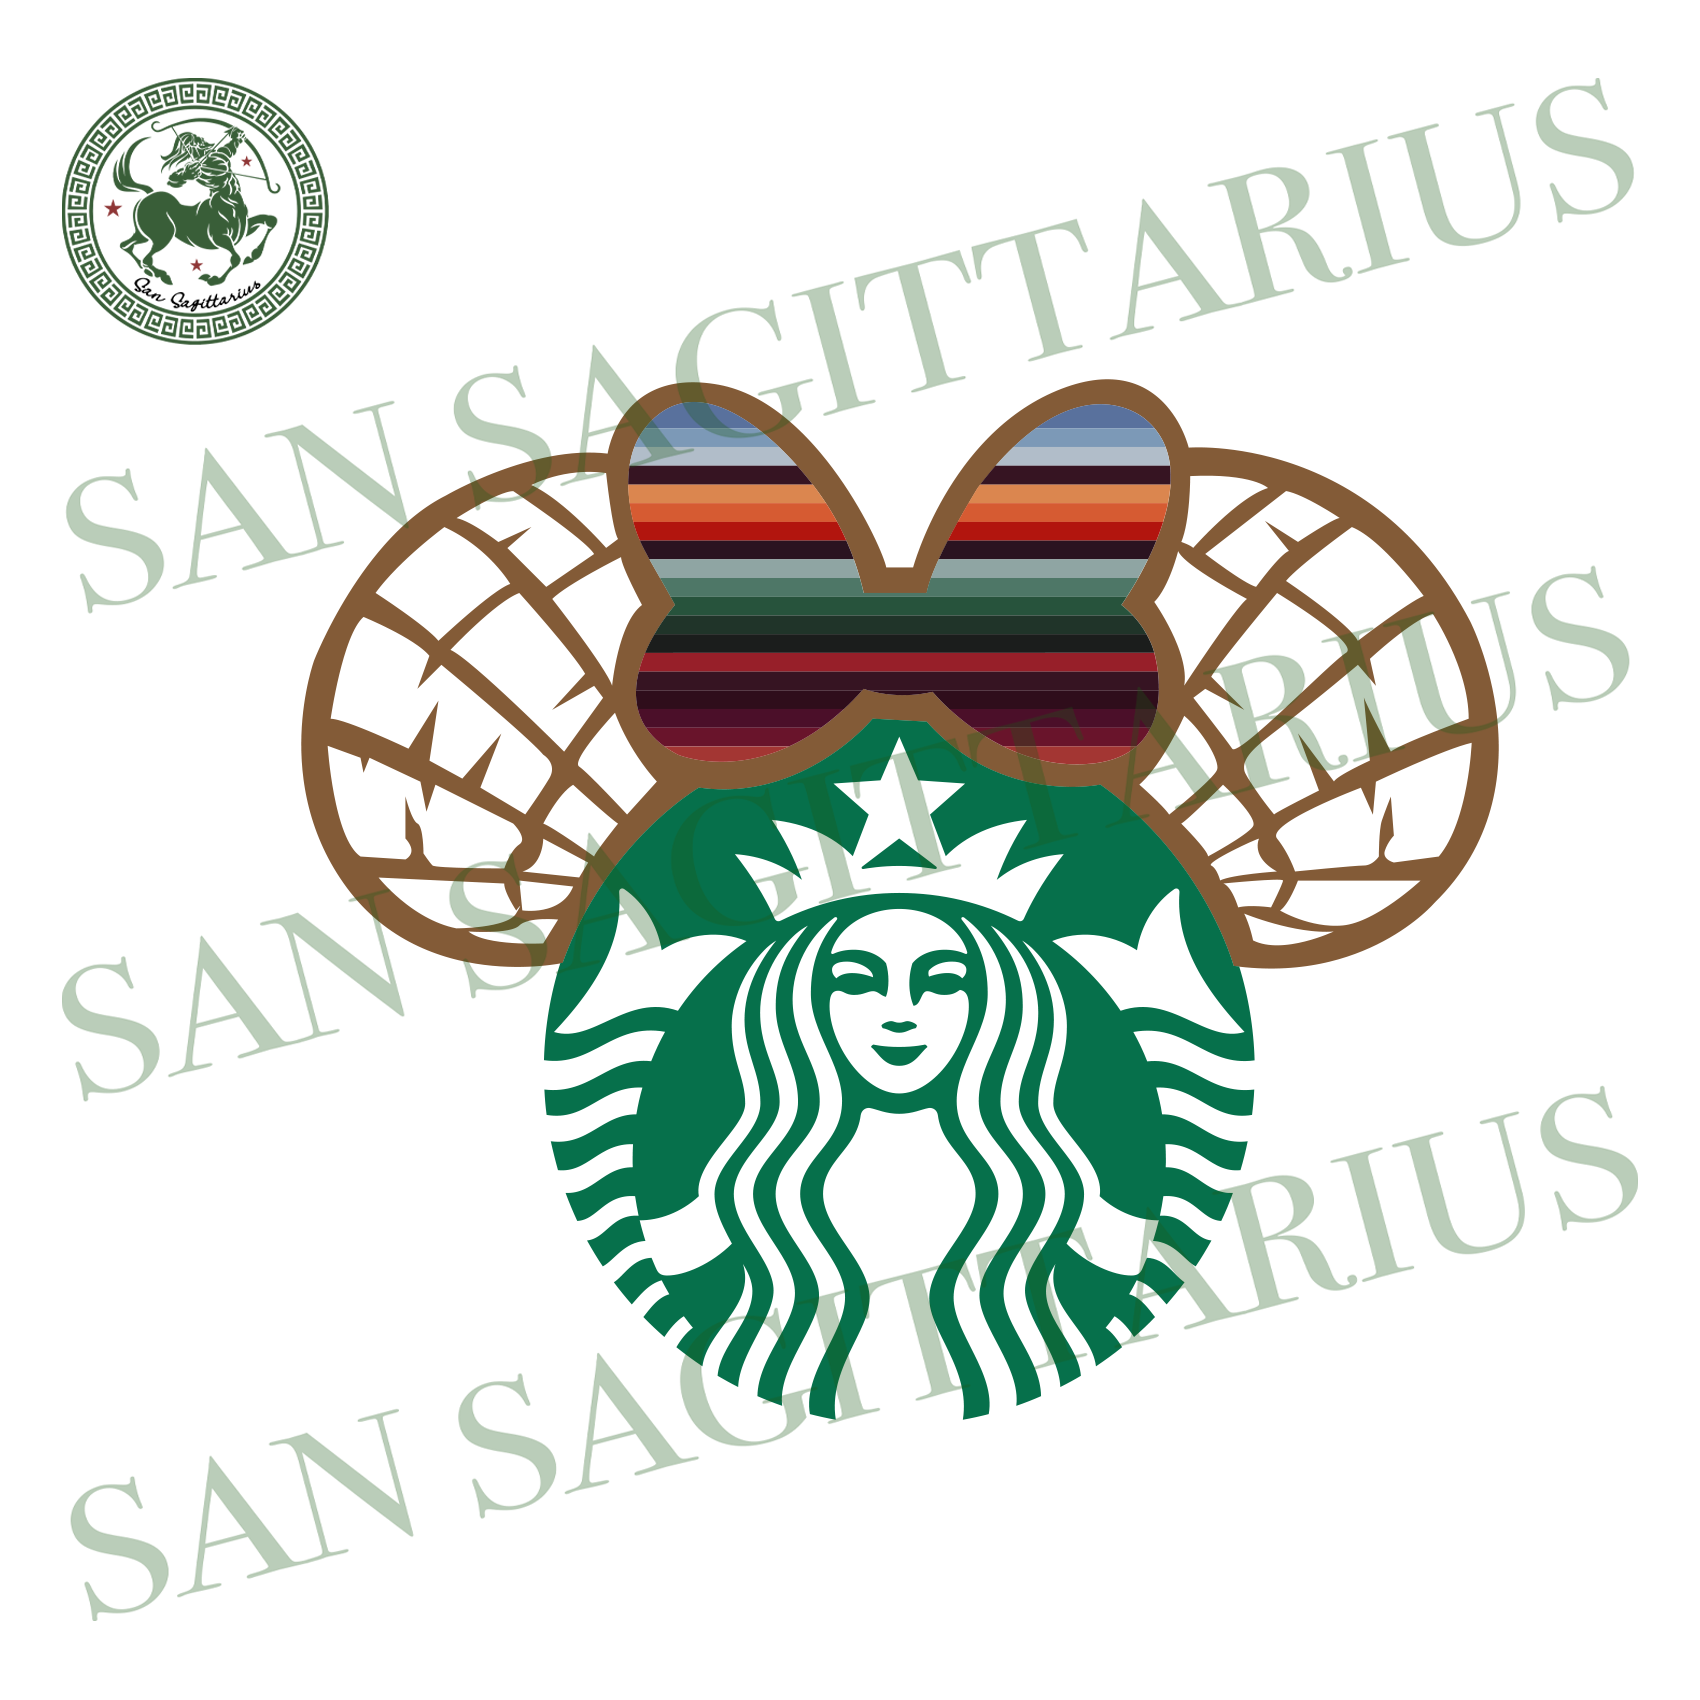 Free Svg Disney Parks Starbucks Cup Svg 16242 File For Diy T Shirt Mug Decoration And More Free Svg File For Cricut Design Cuts